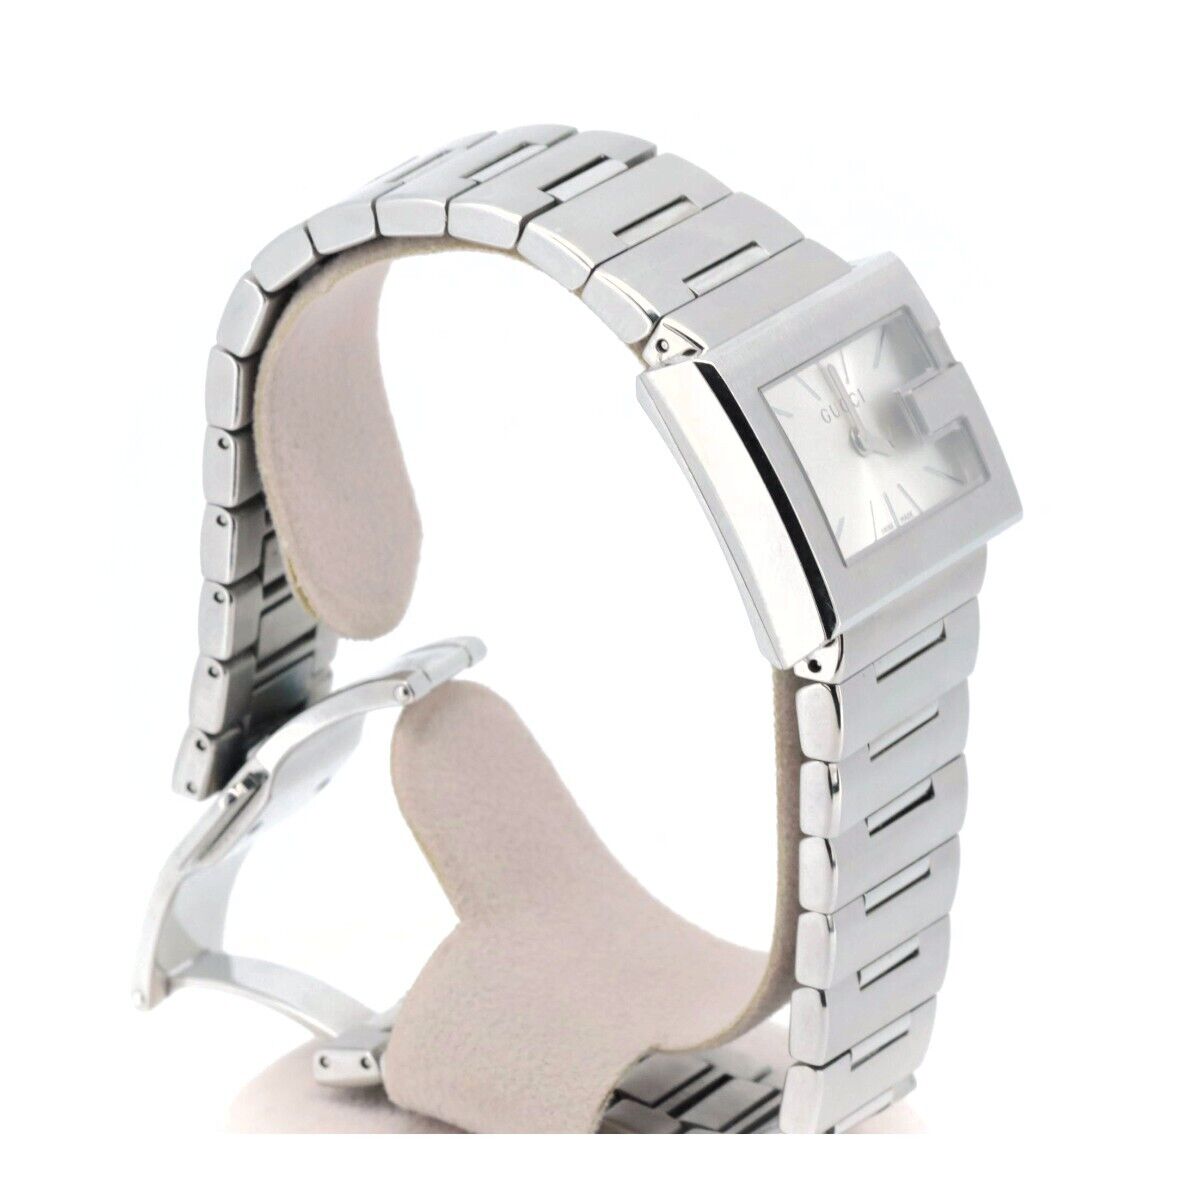 GUCCI G Timeless Rectangle YA100520 Women's Watch Quartz Silver